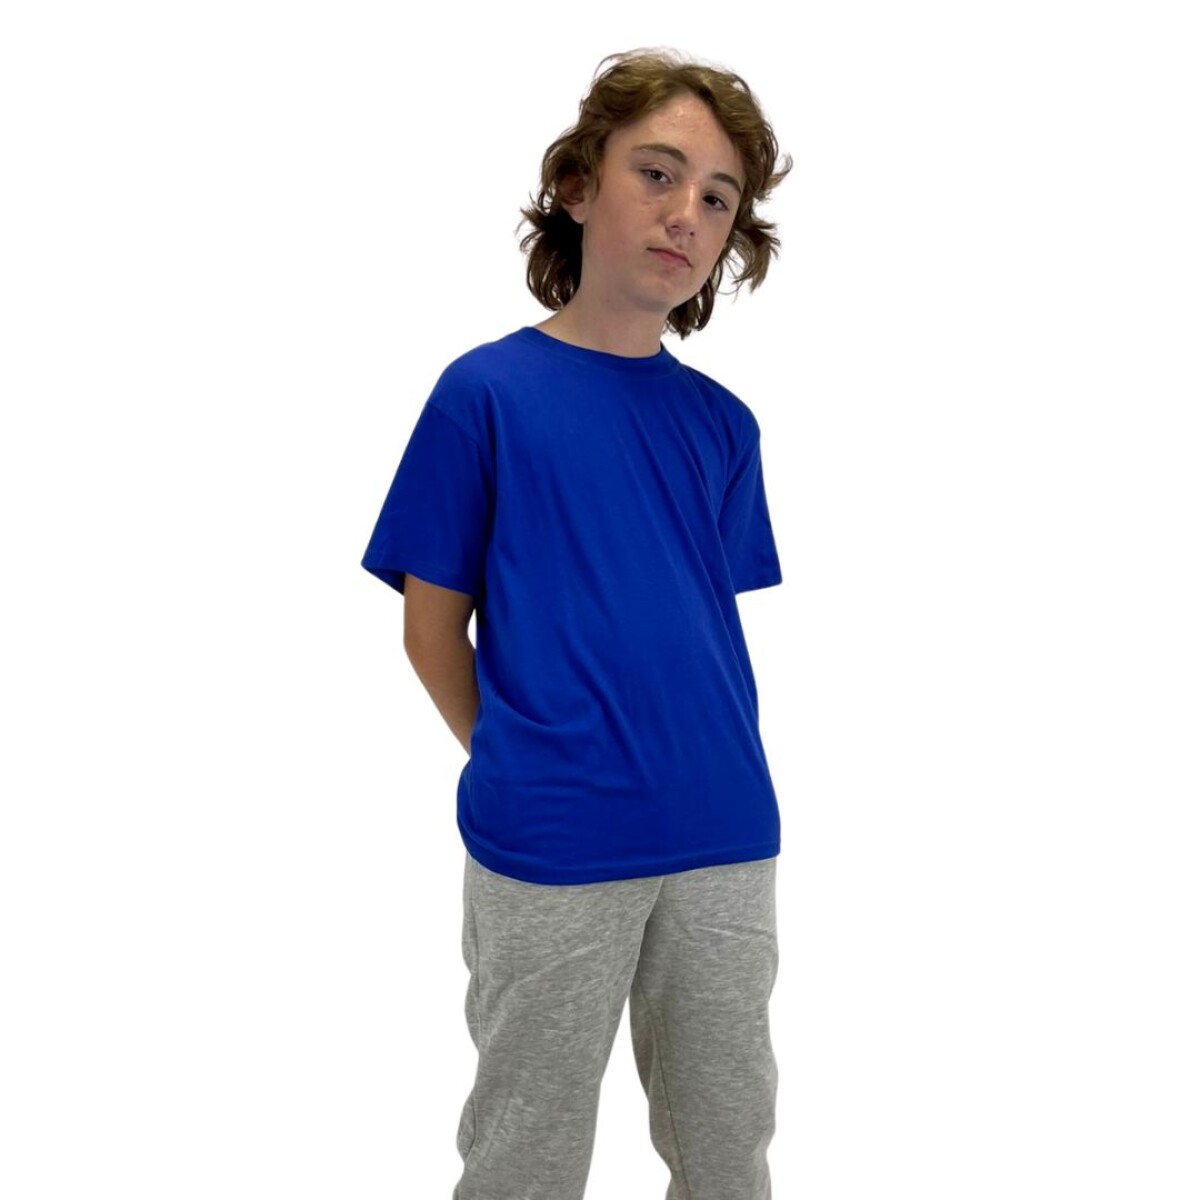 Camiseta Classic Niños - Azul francia 